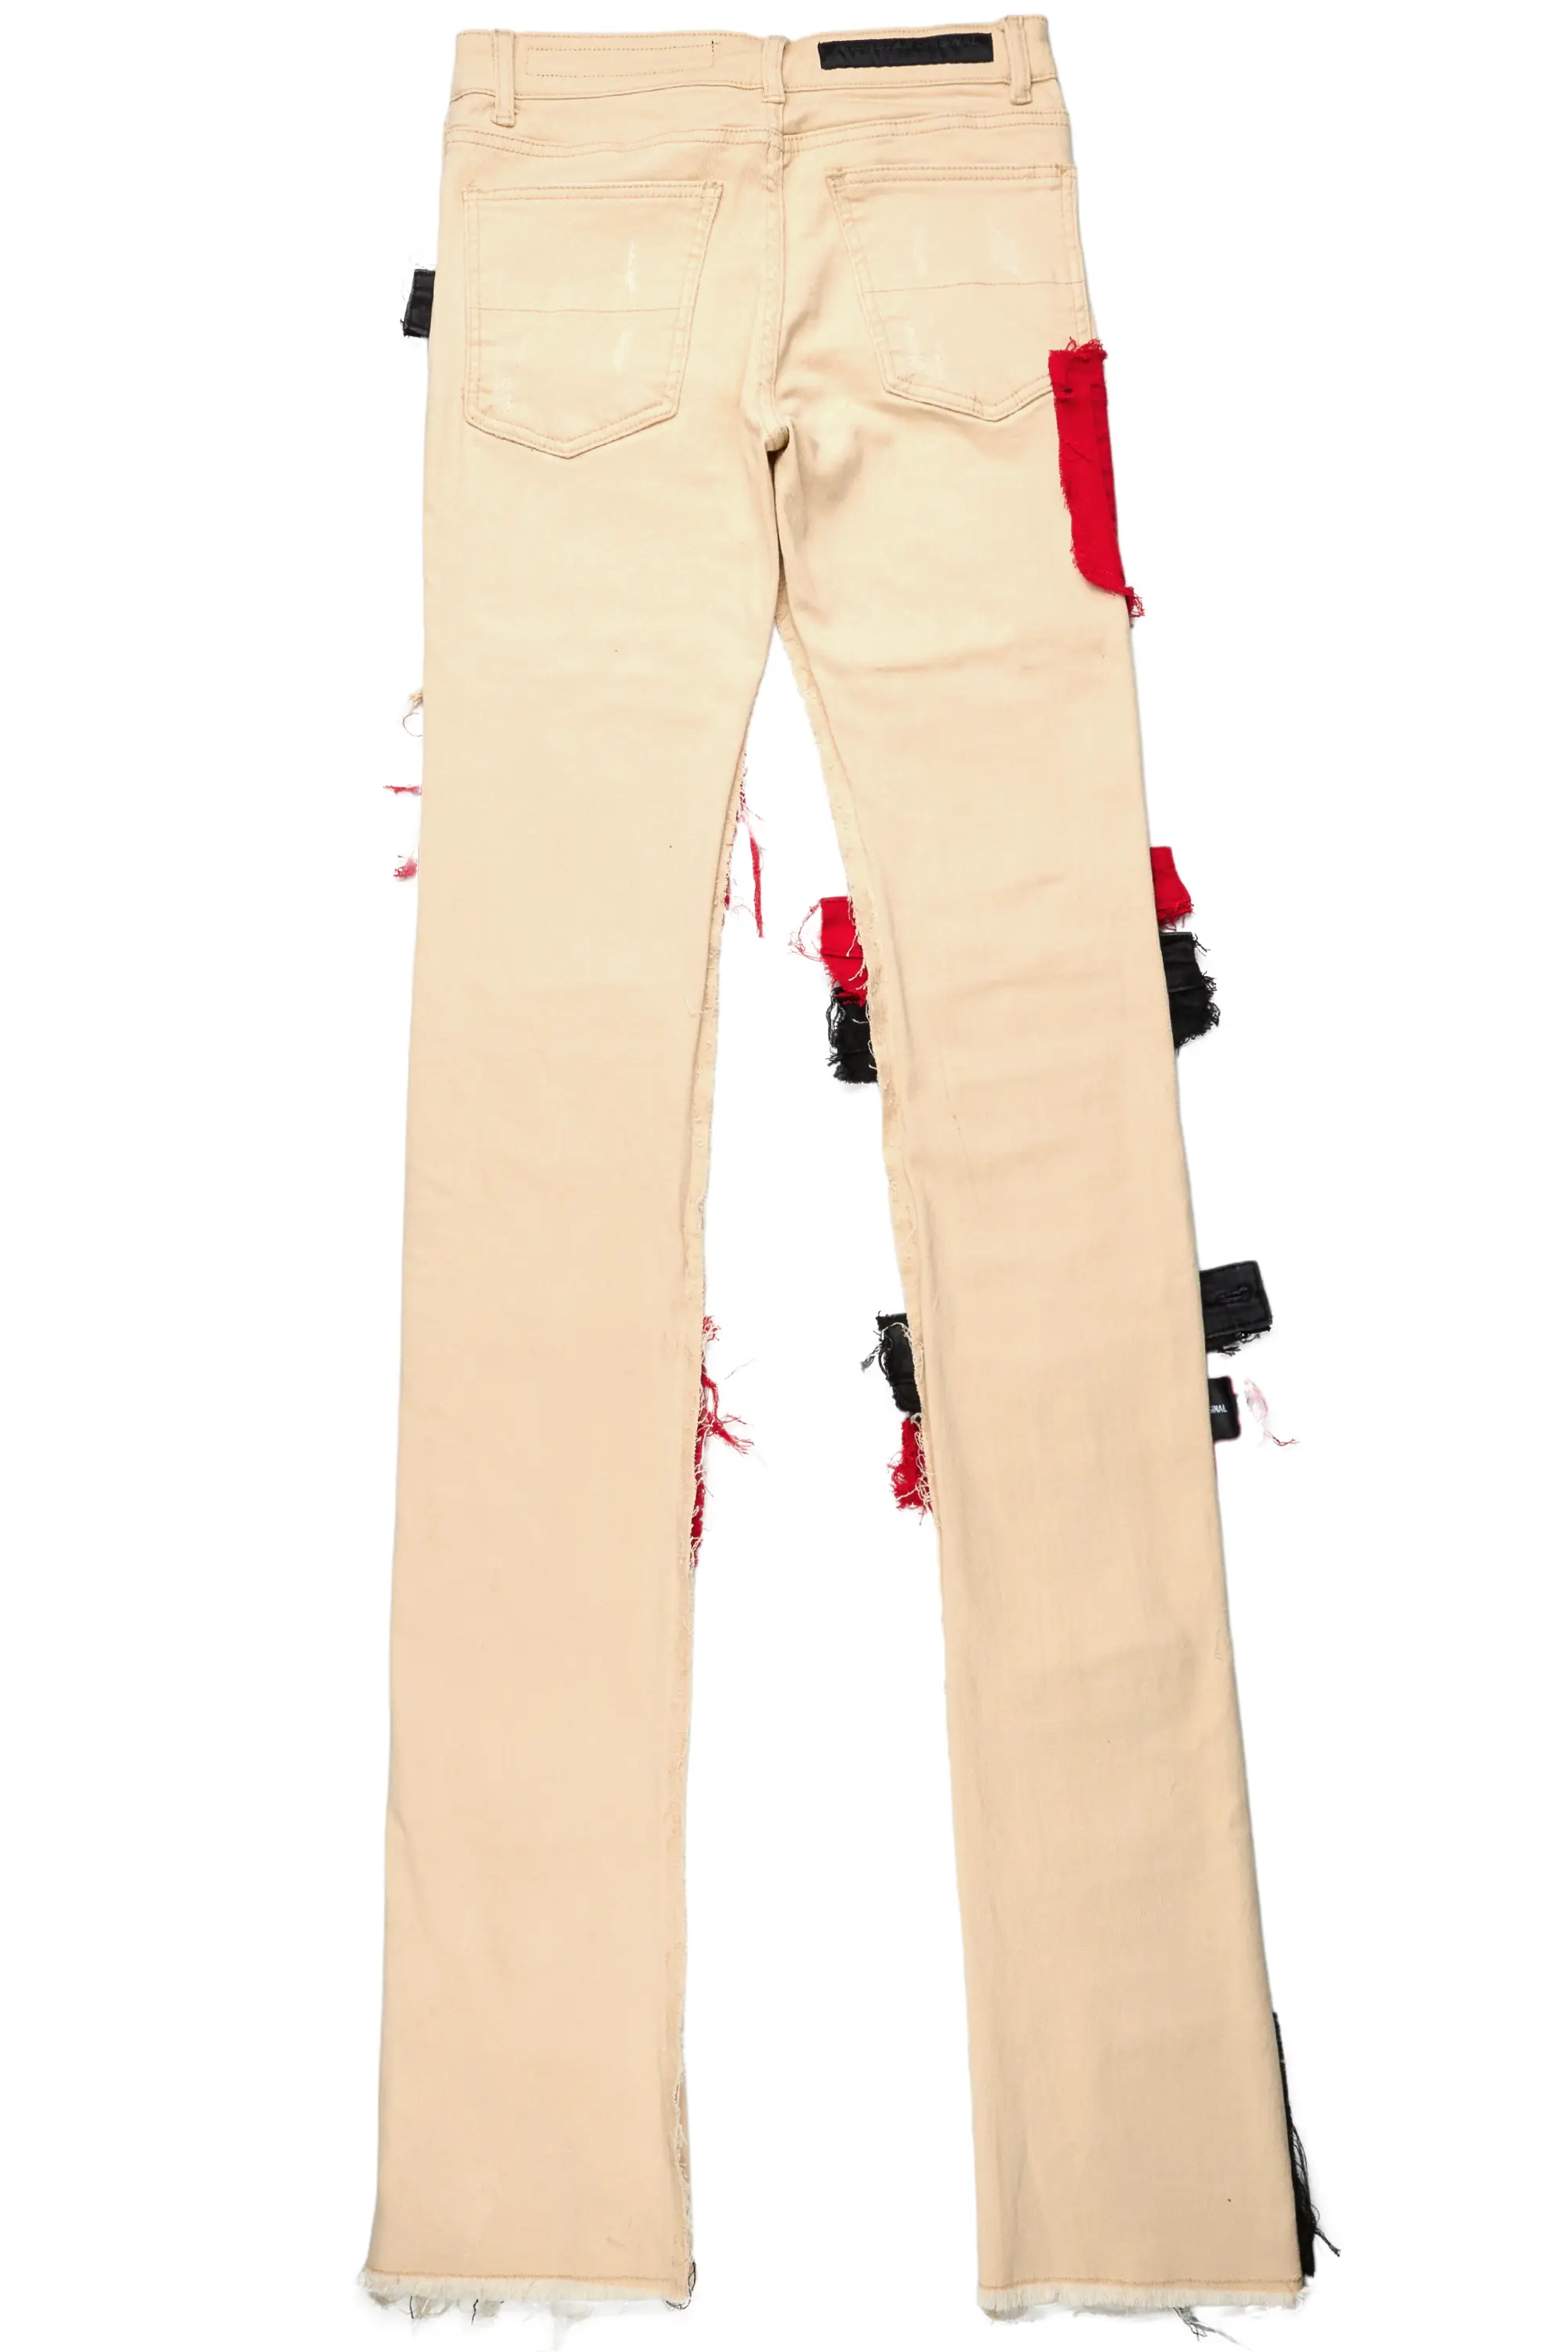 Kaizen Beige/Red Patchwork Super Stacked Flare Jean